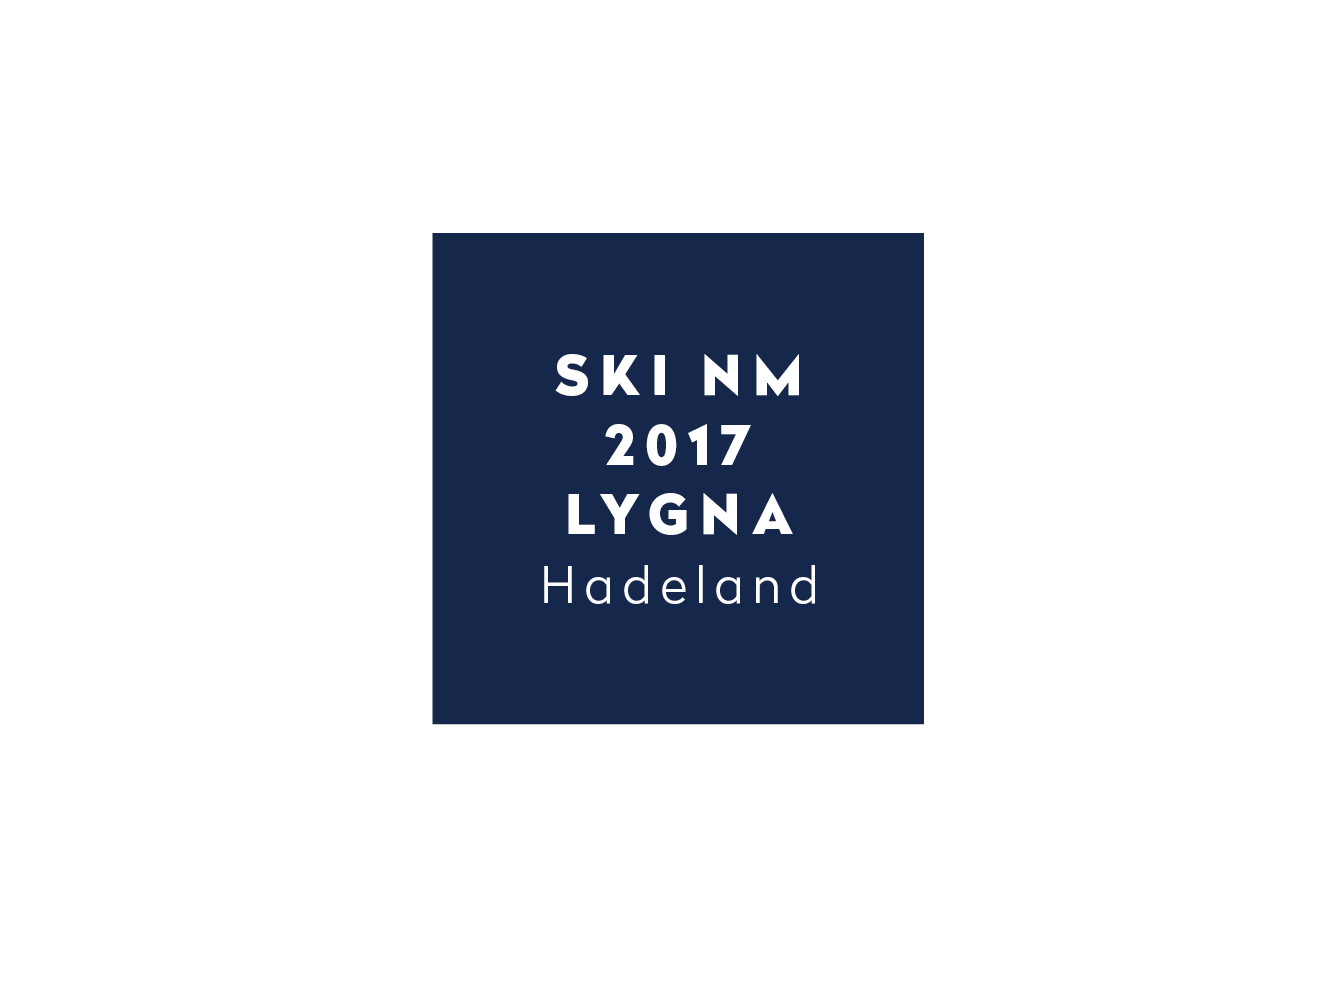 Ski NM lygna 2017 logo